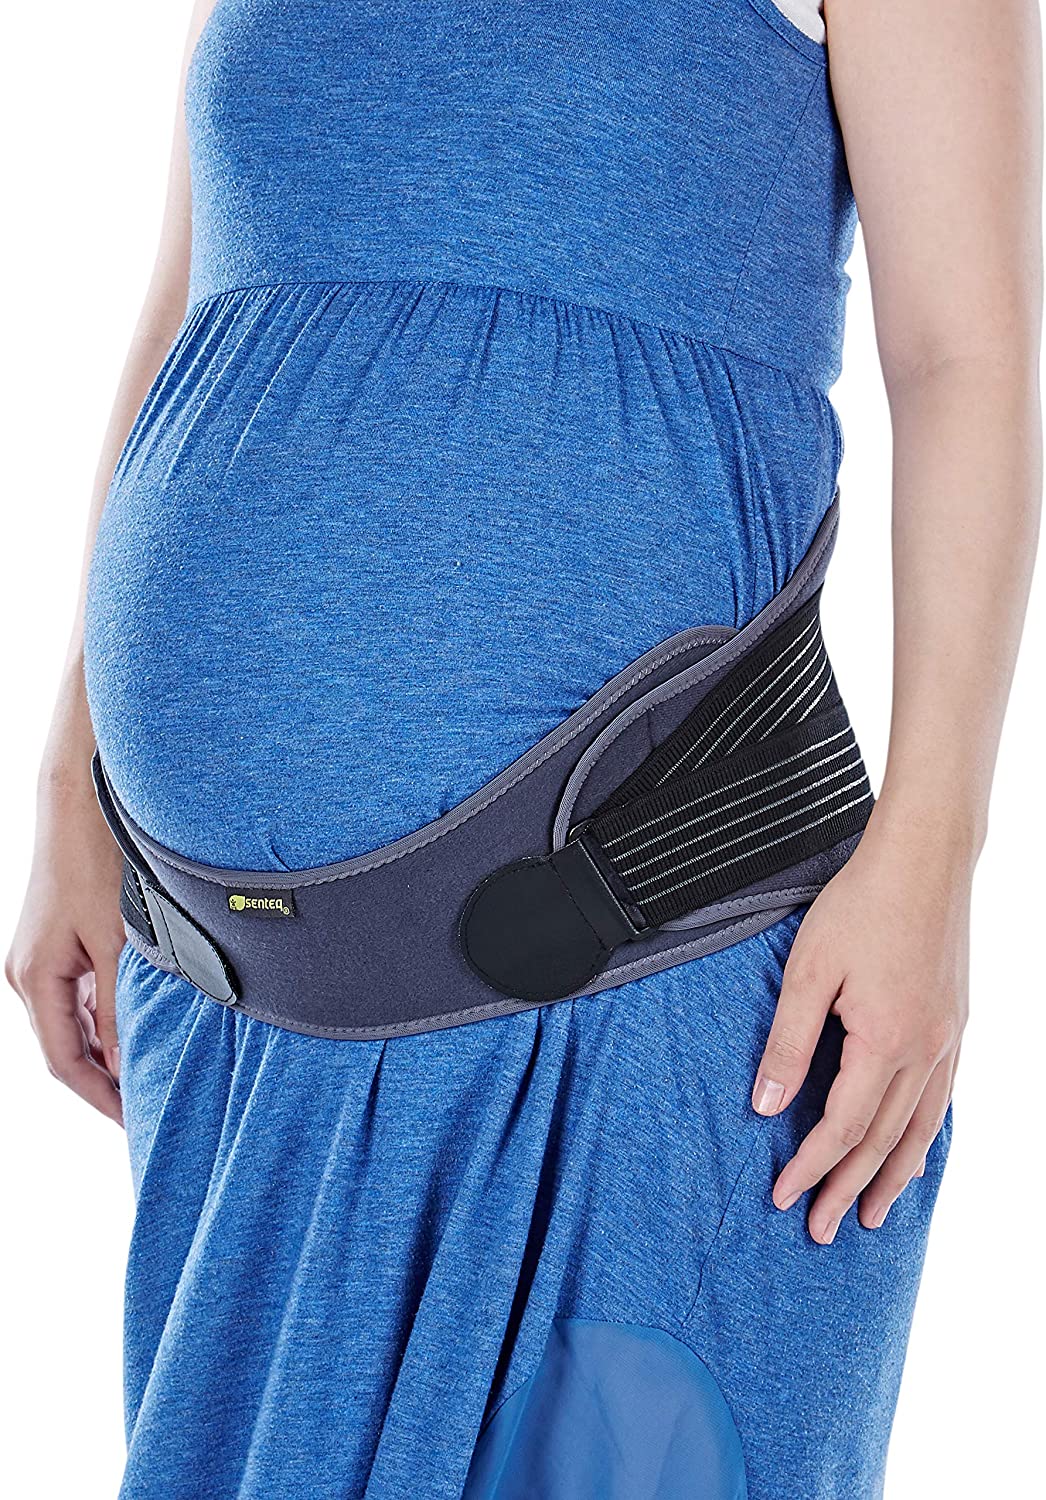 SENTEQ Pregnancy Belt Belly Band (SQ3-H009)